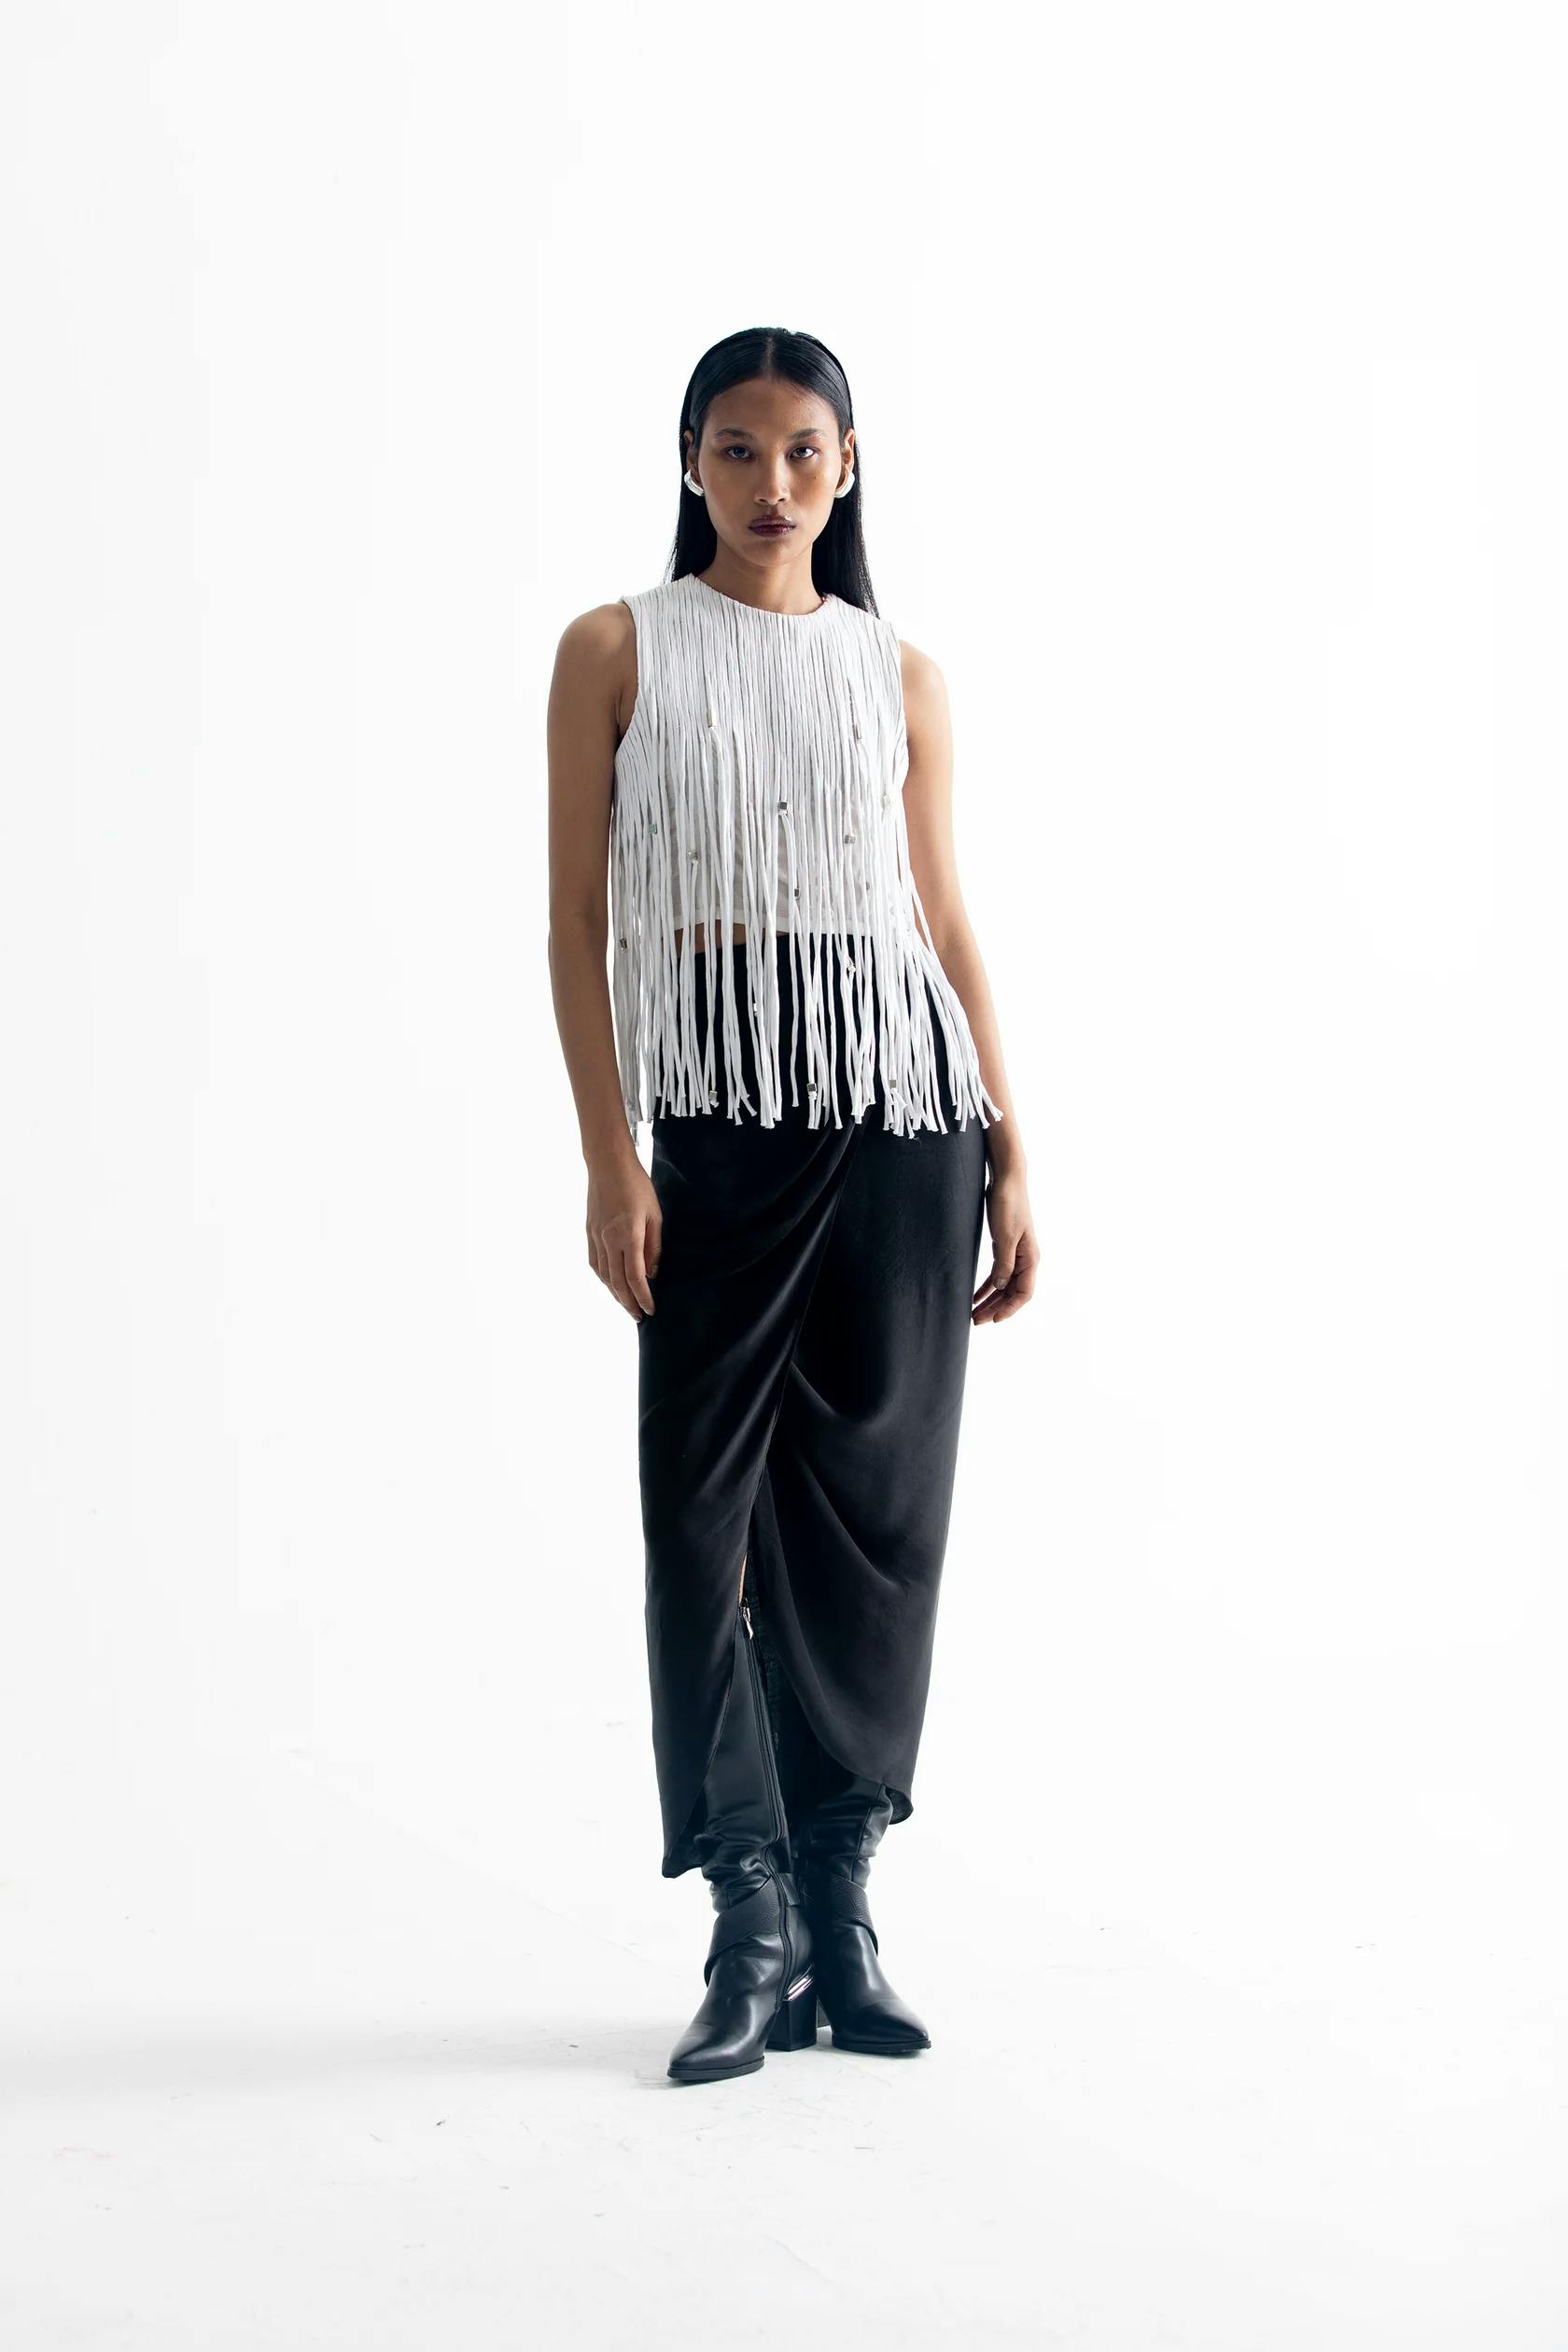 Black overlap drape skirt, a product by Corpora Studio